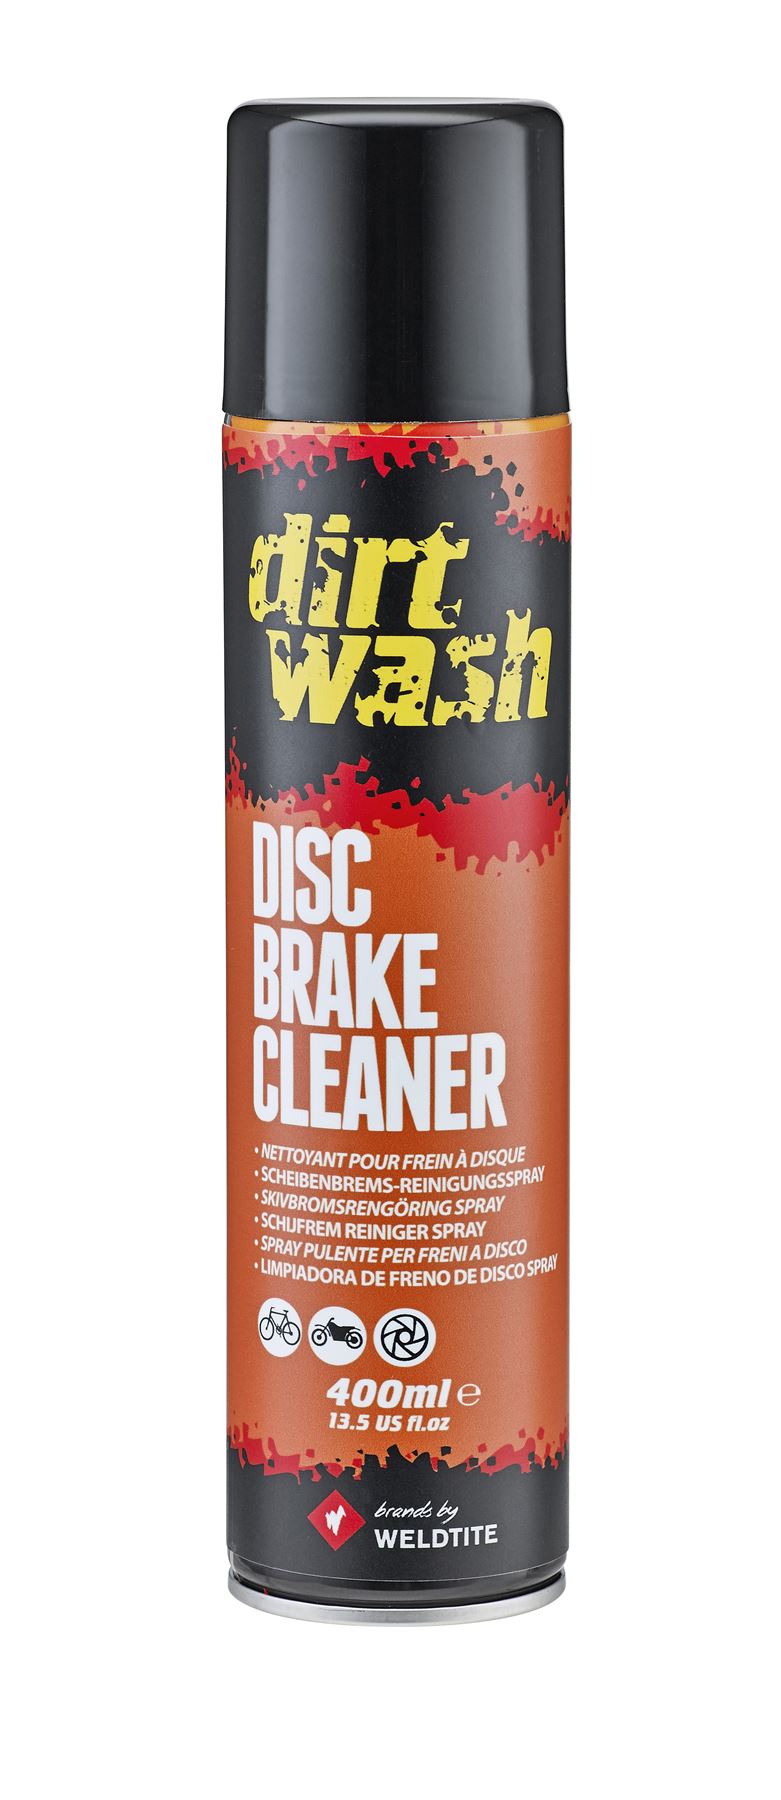 Dirtwash 3072 Disc Brake Cleaner Aerosol Spray (400ml)